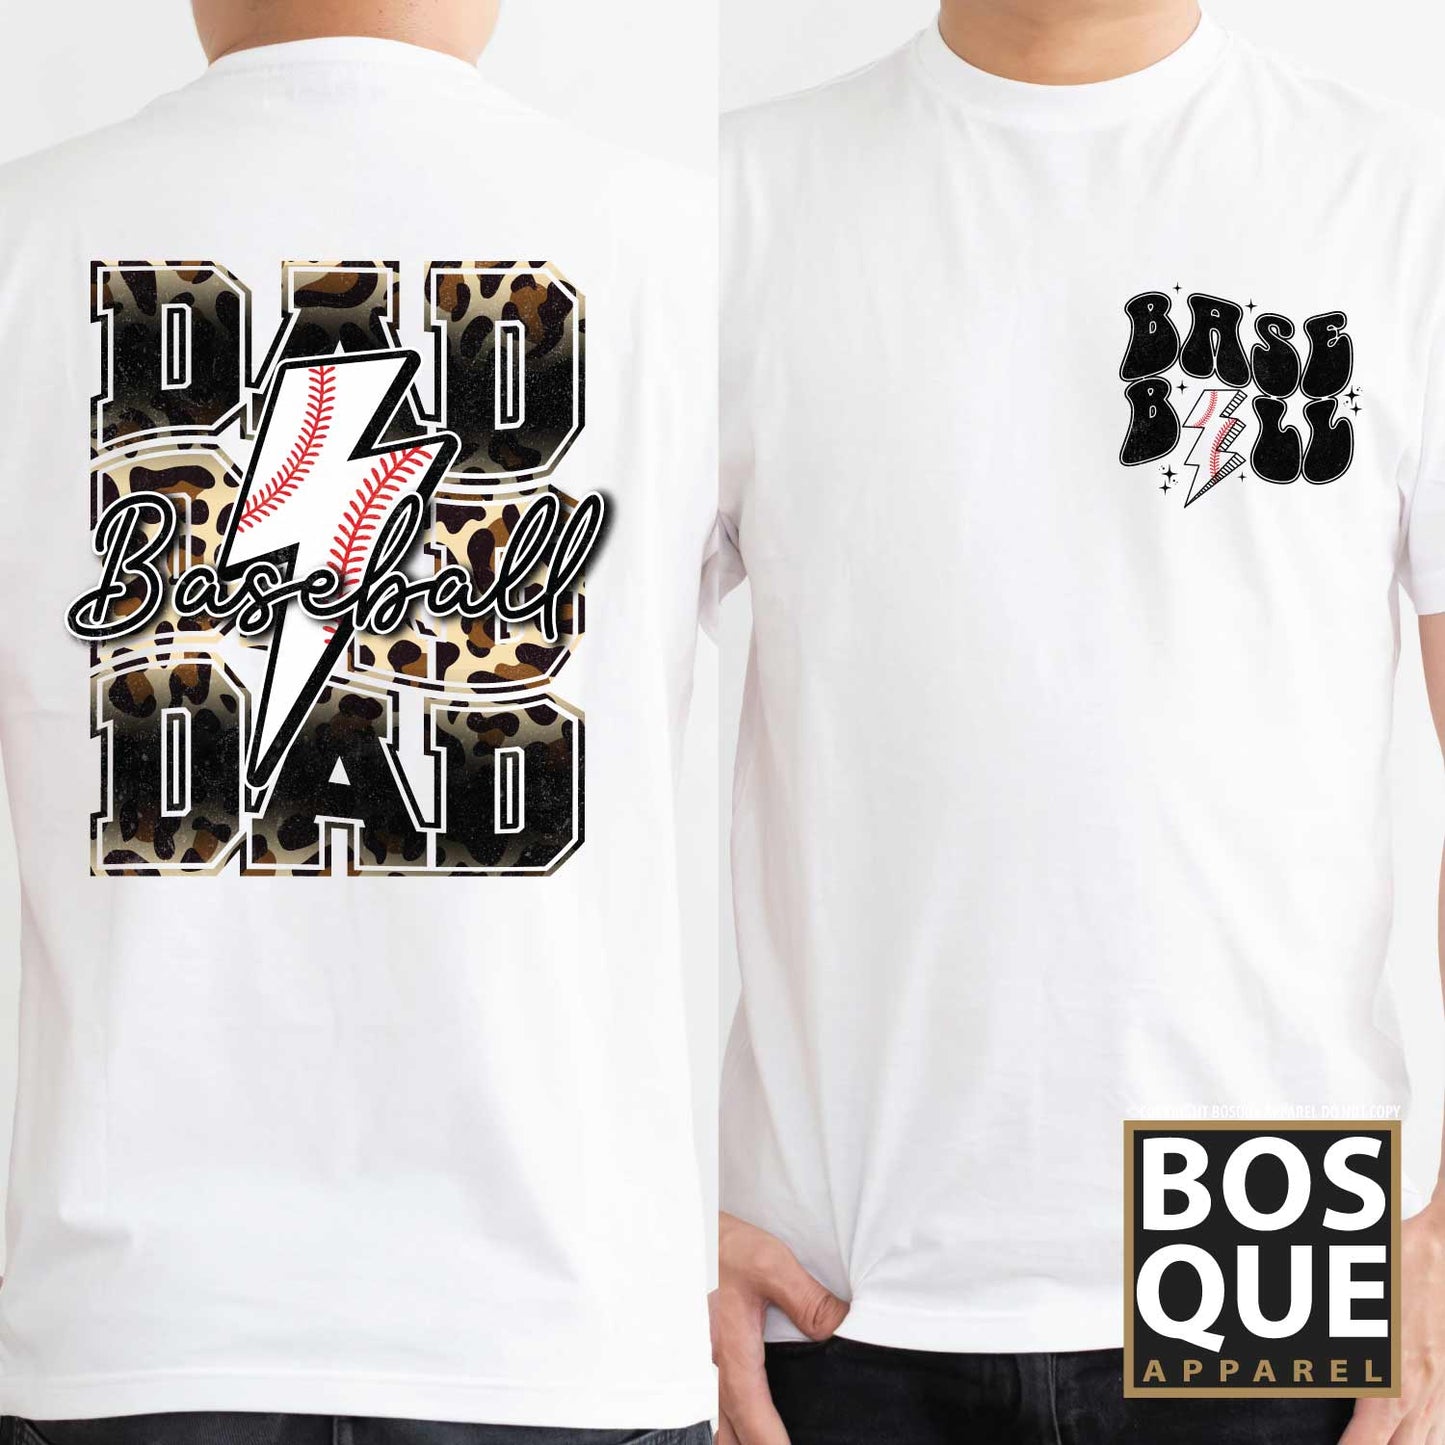 Baseball Dad Lightning Bolt Leopard Print Pocket and Back Print Unisex t-shirt